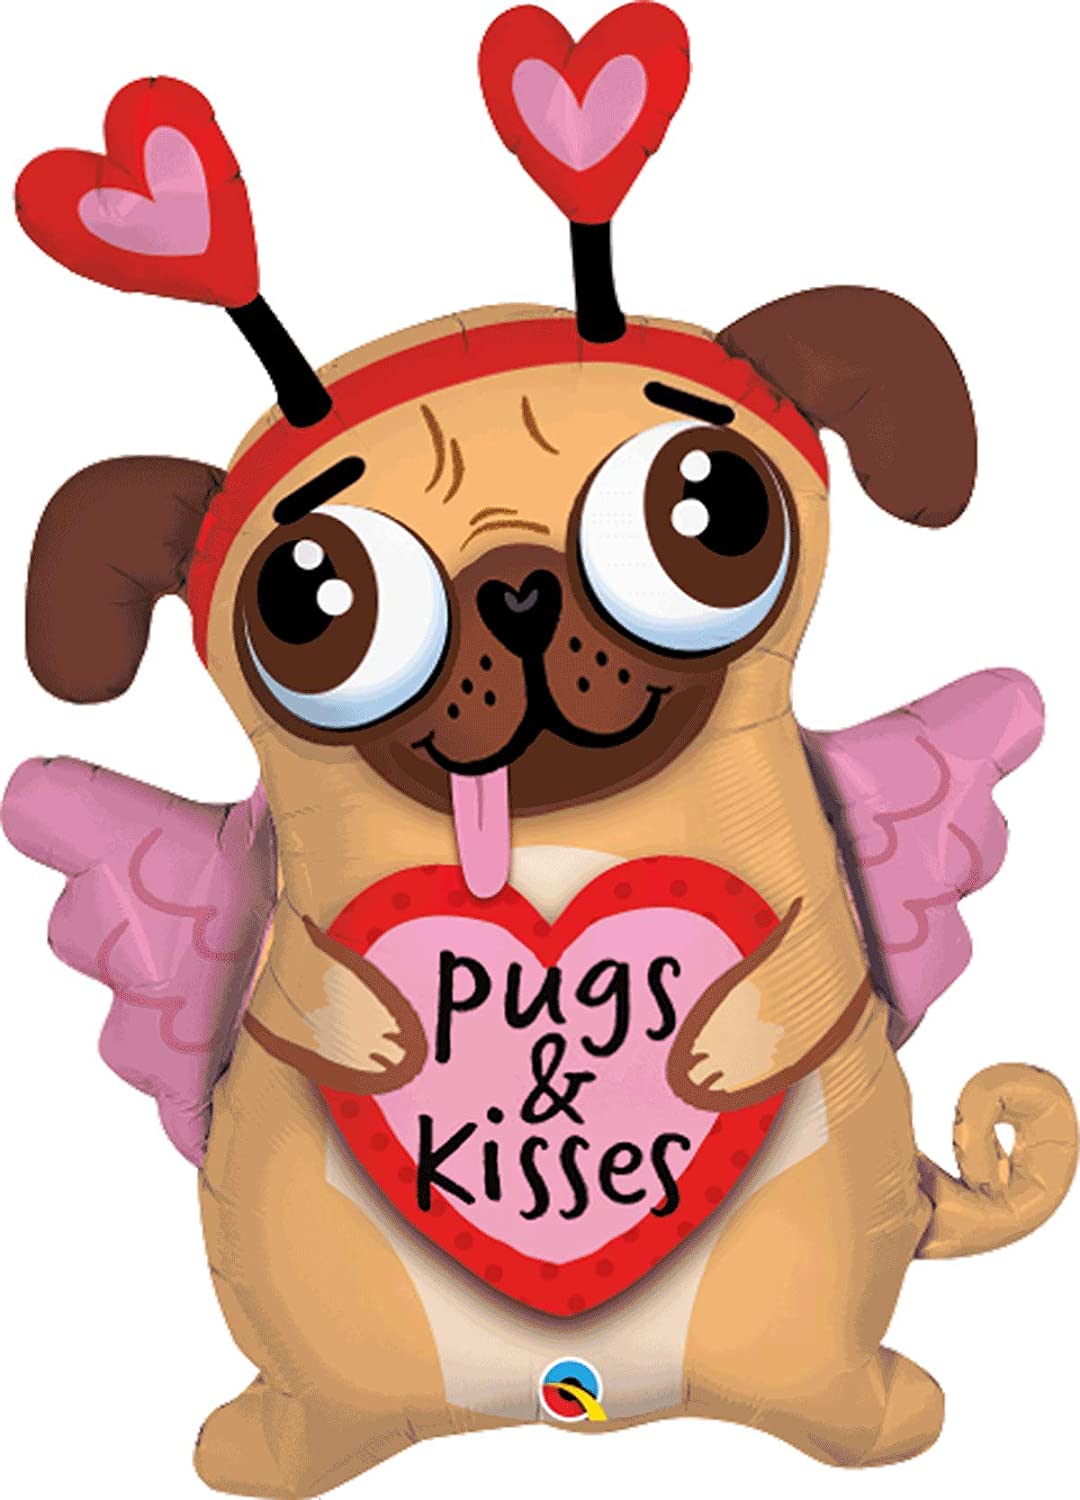 Pugs and Kisses Valentine Love Balloon